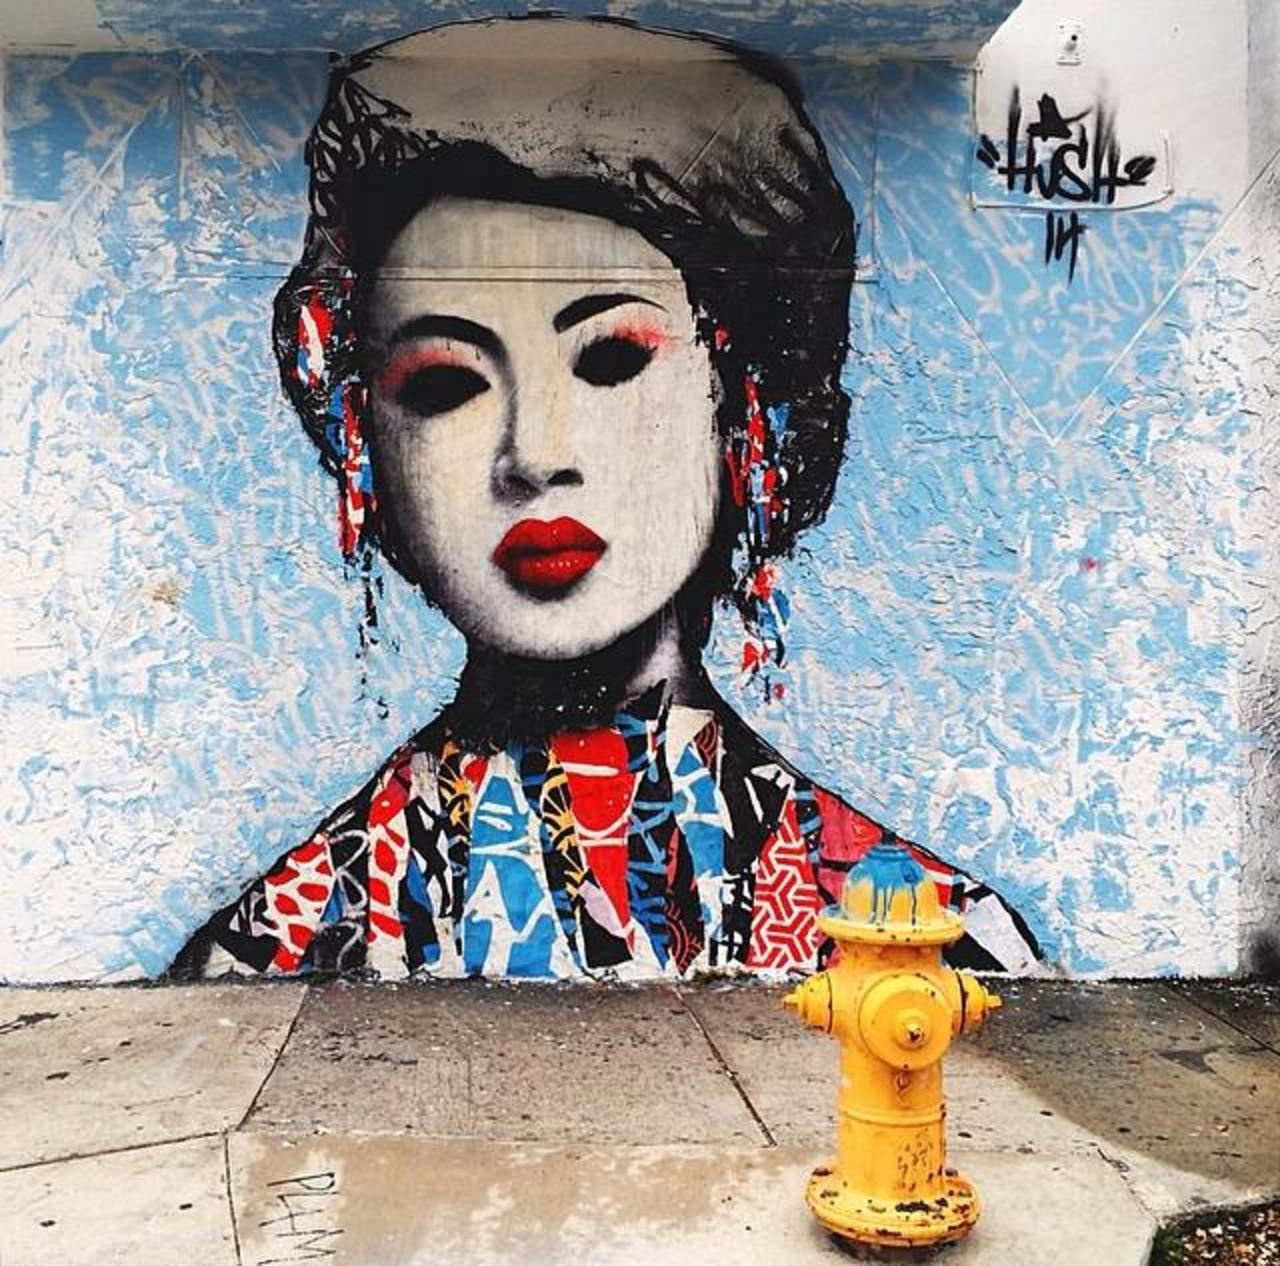 Hush - Wynwood, Miami 

#art #streetart http://t.co/m8Qjs8mp2H via @GoogleStreetArt